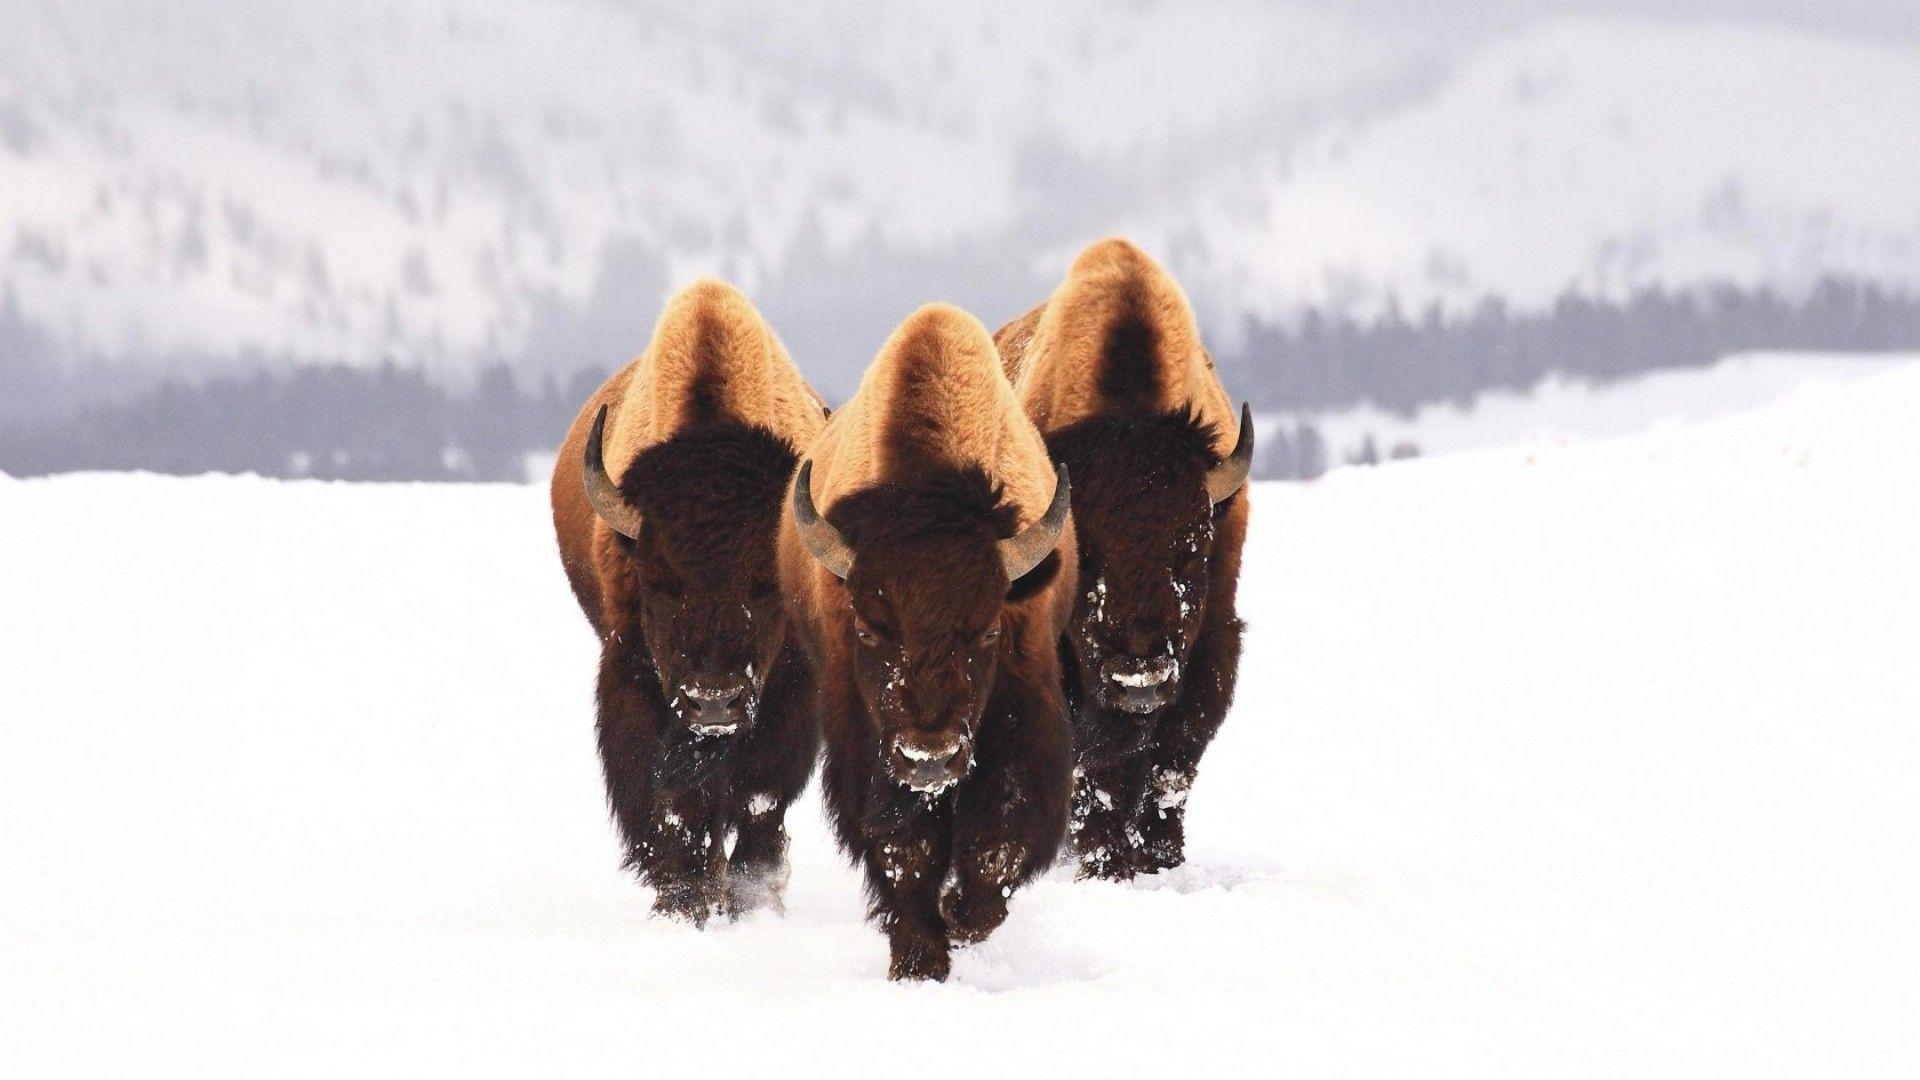 HD Wallpapers » Animals » bison snow animals winter